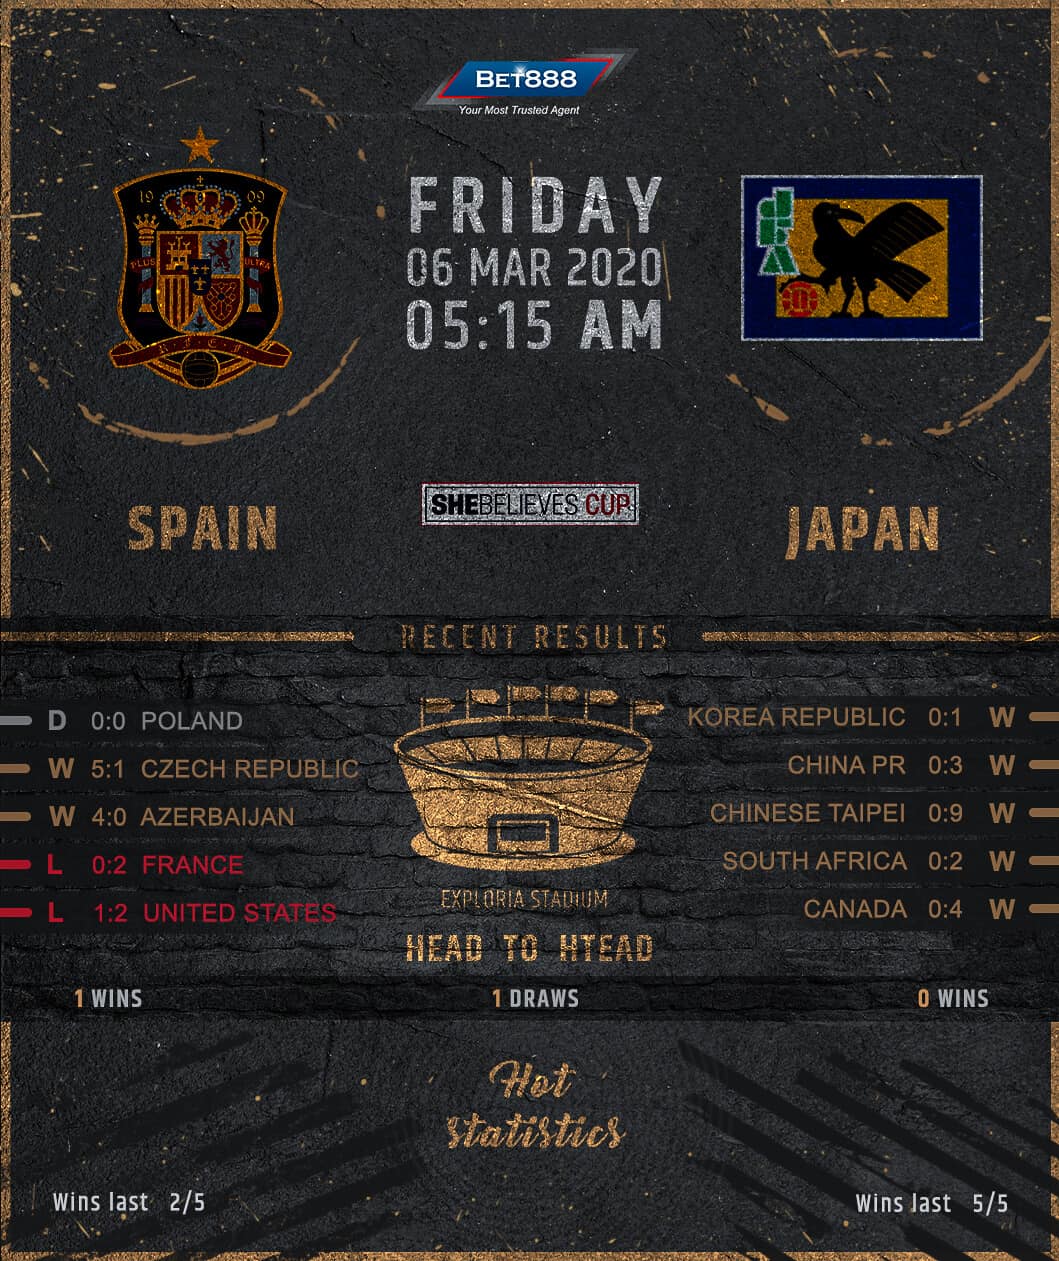 Spain vs Japan 06/03/20